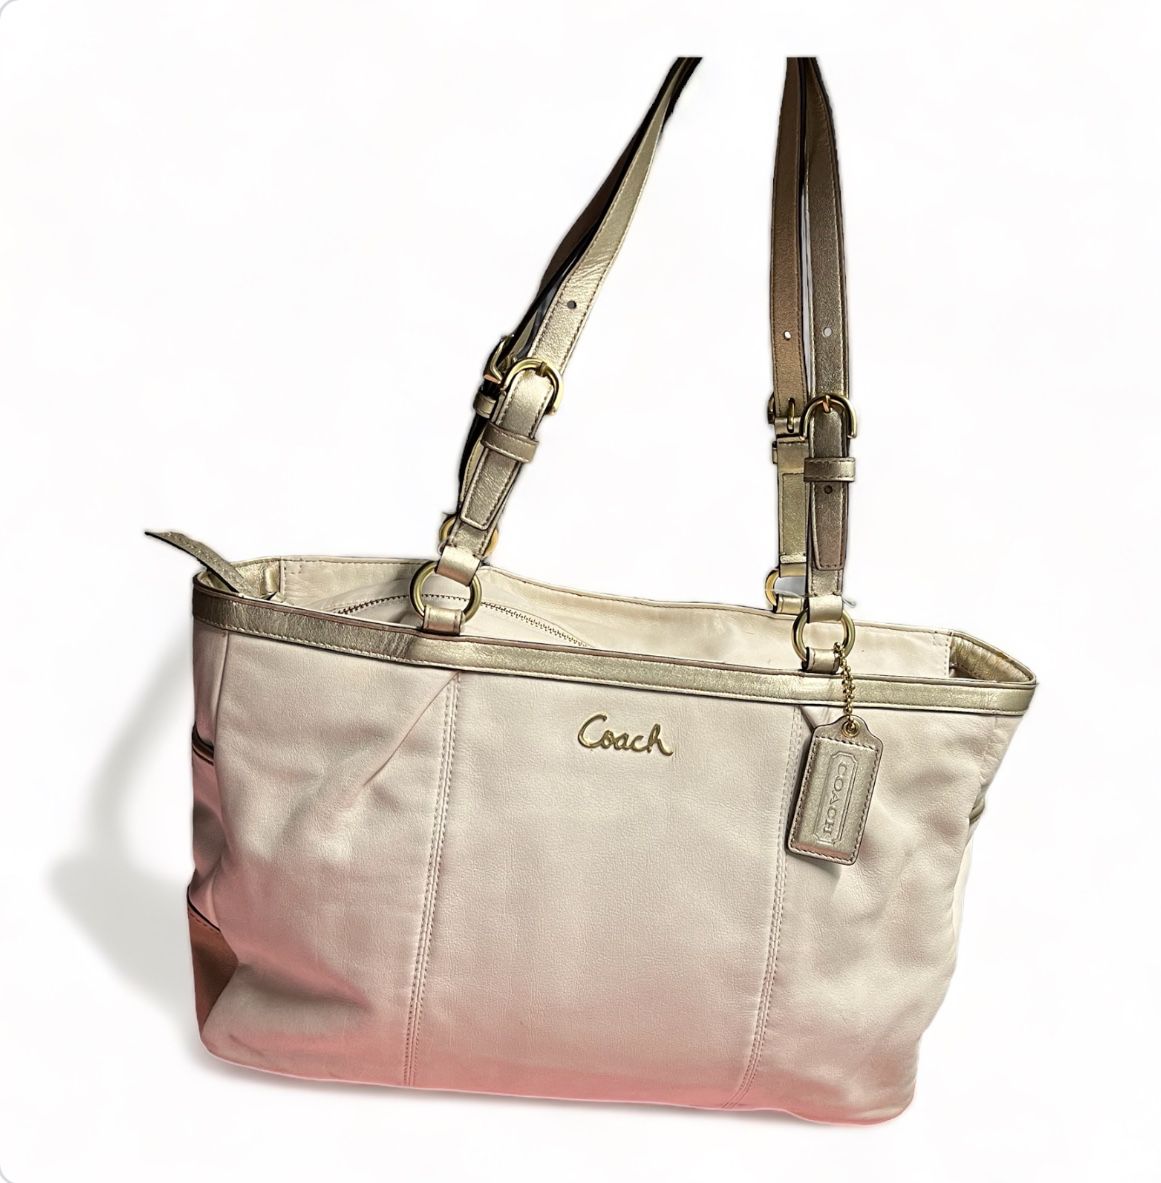 Coach Bag C1175-F17722, Cream White Gold Shoulder Bag Purse